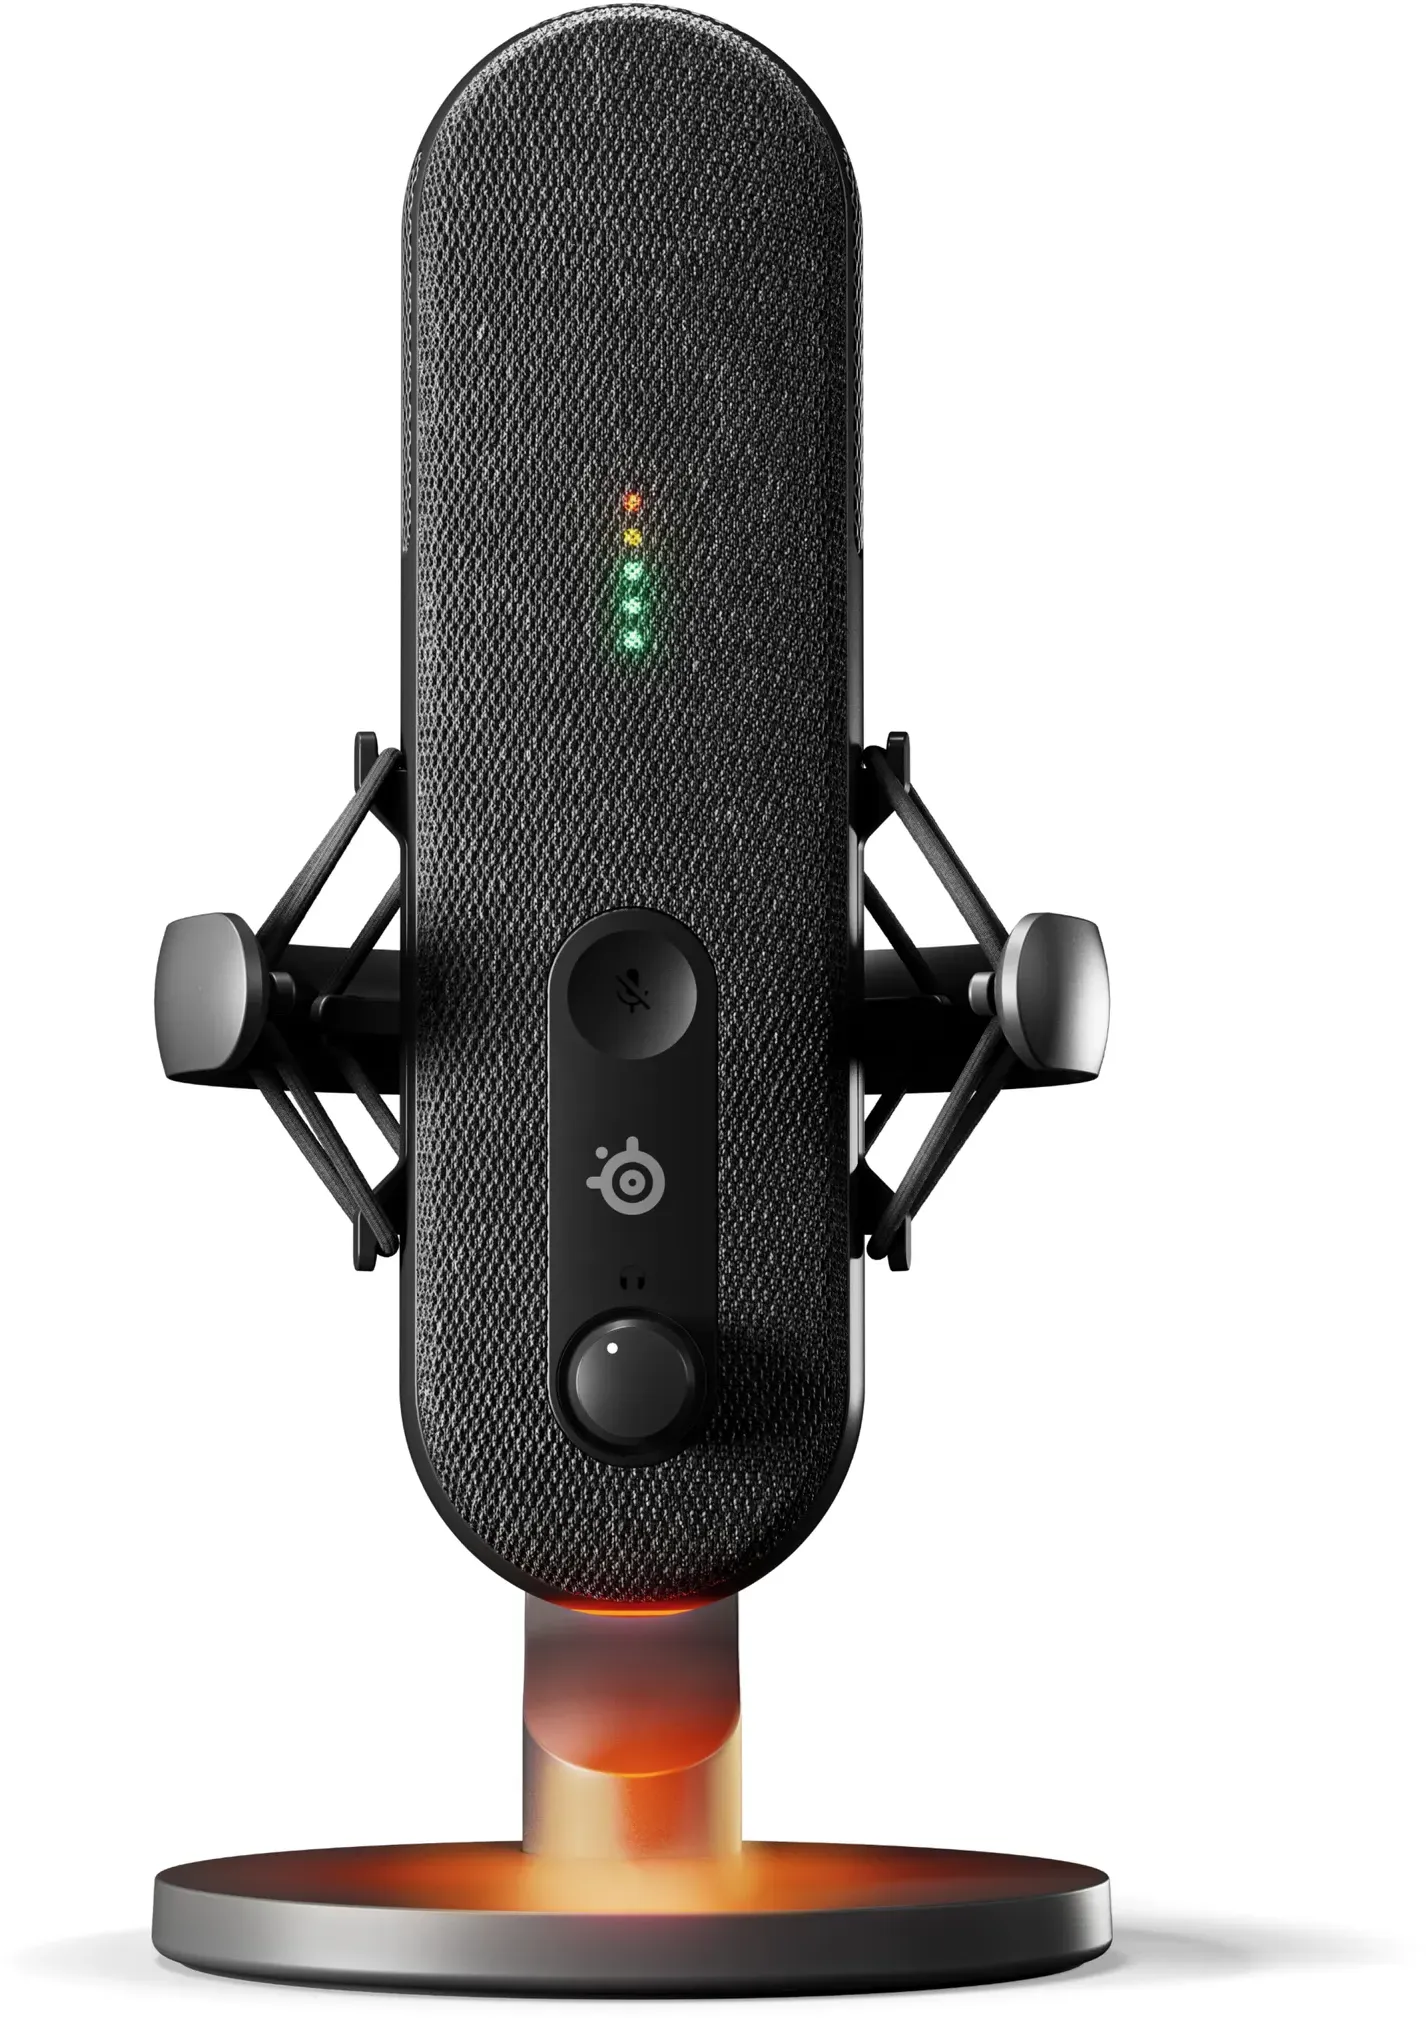 STEELSERIES Streaming-Mikrofon "Alias" Mikrofone KI-gestützte Geräuschunterdrückung schwarz Mikrofone